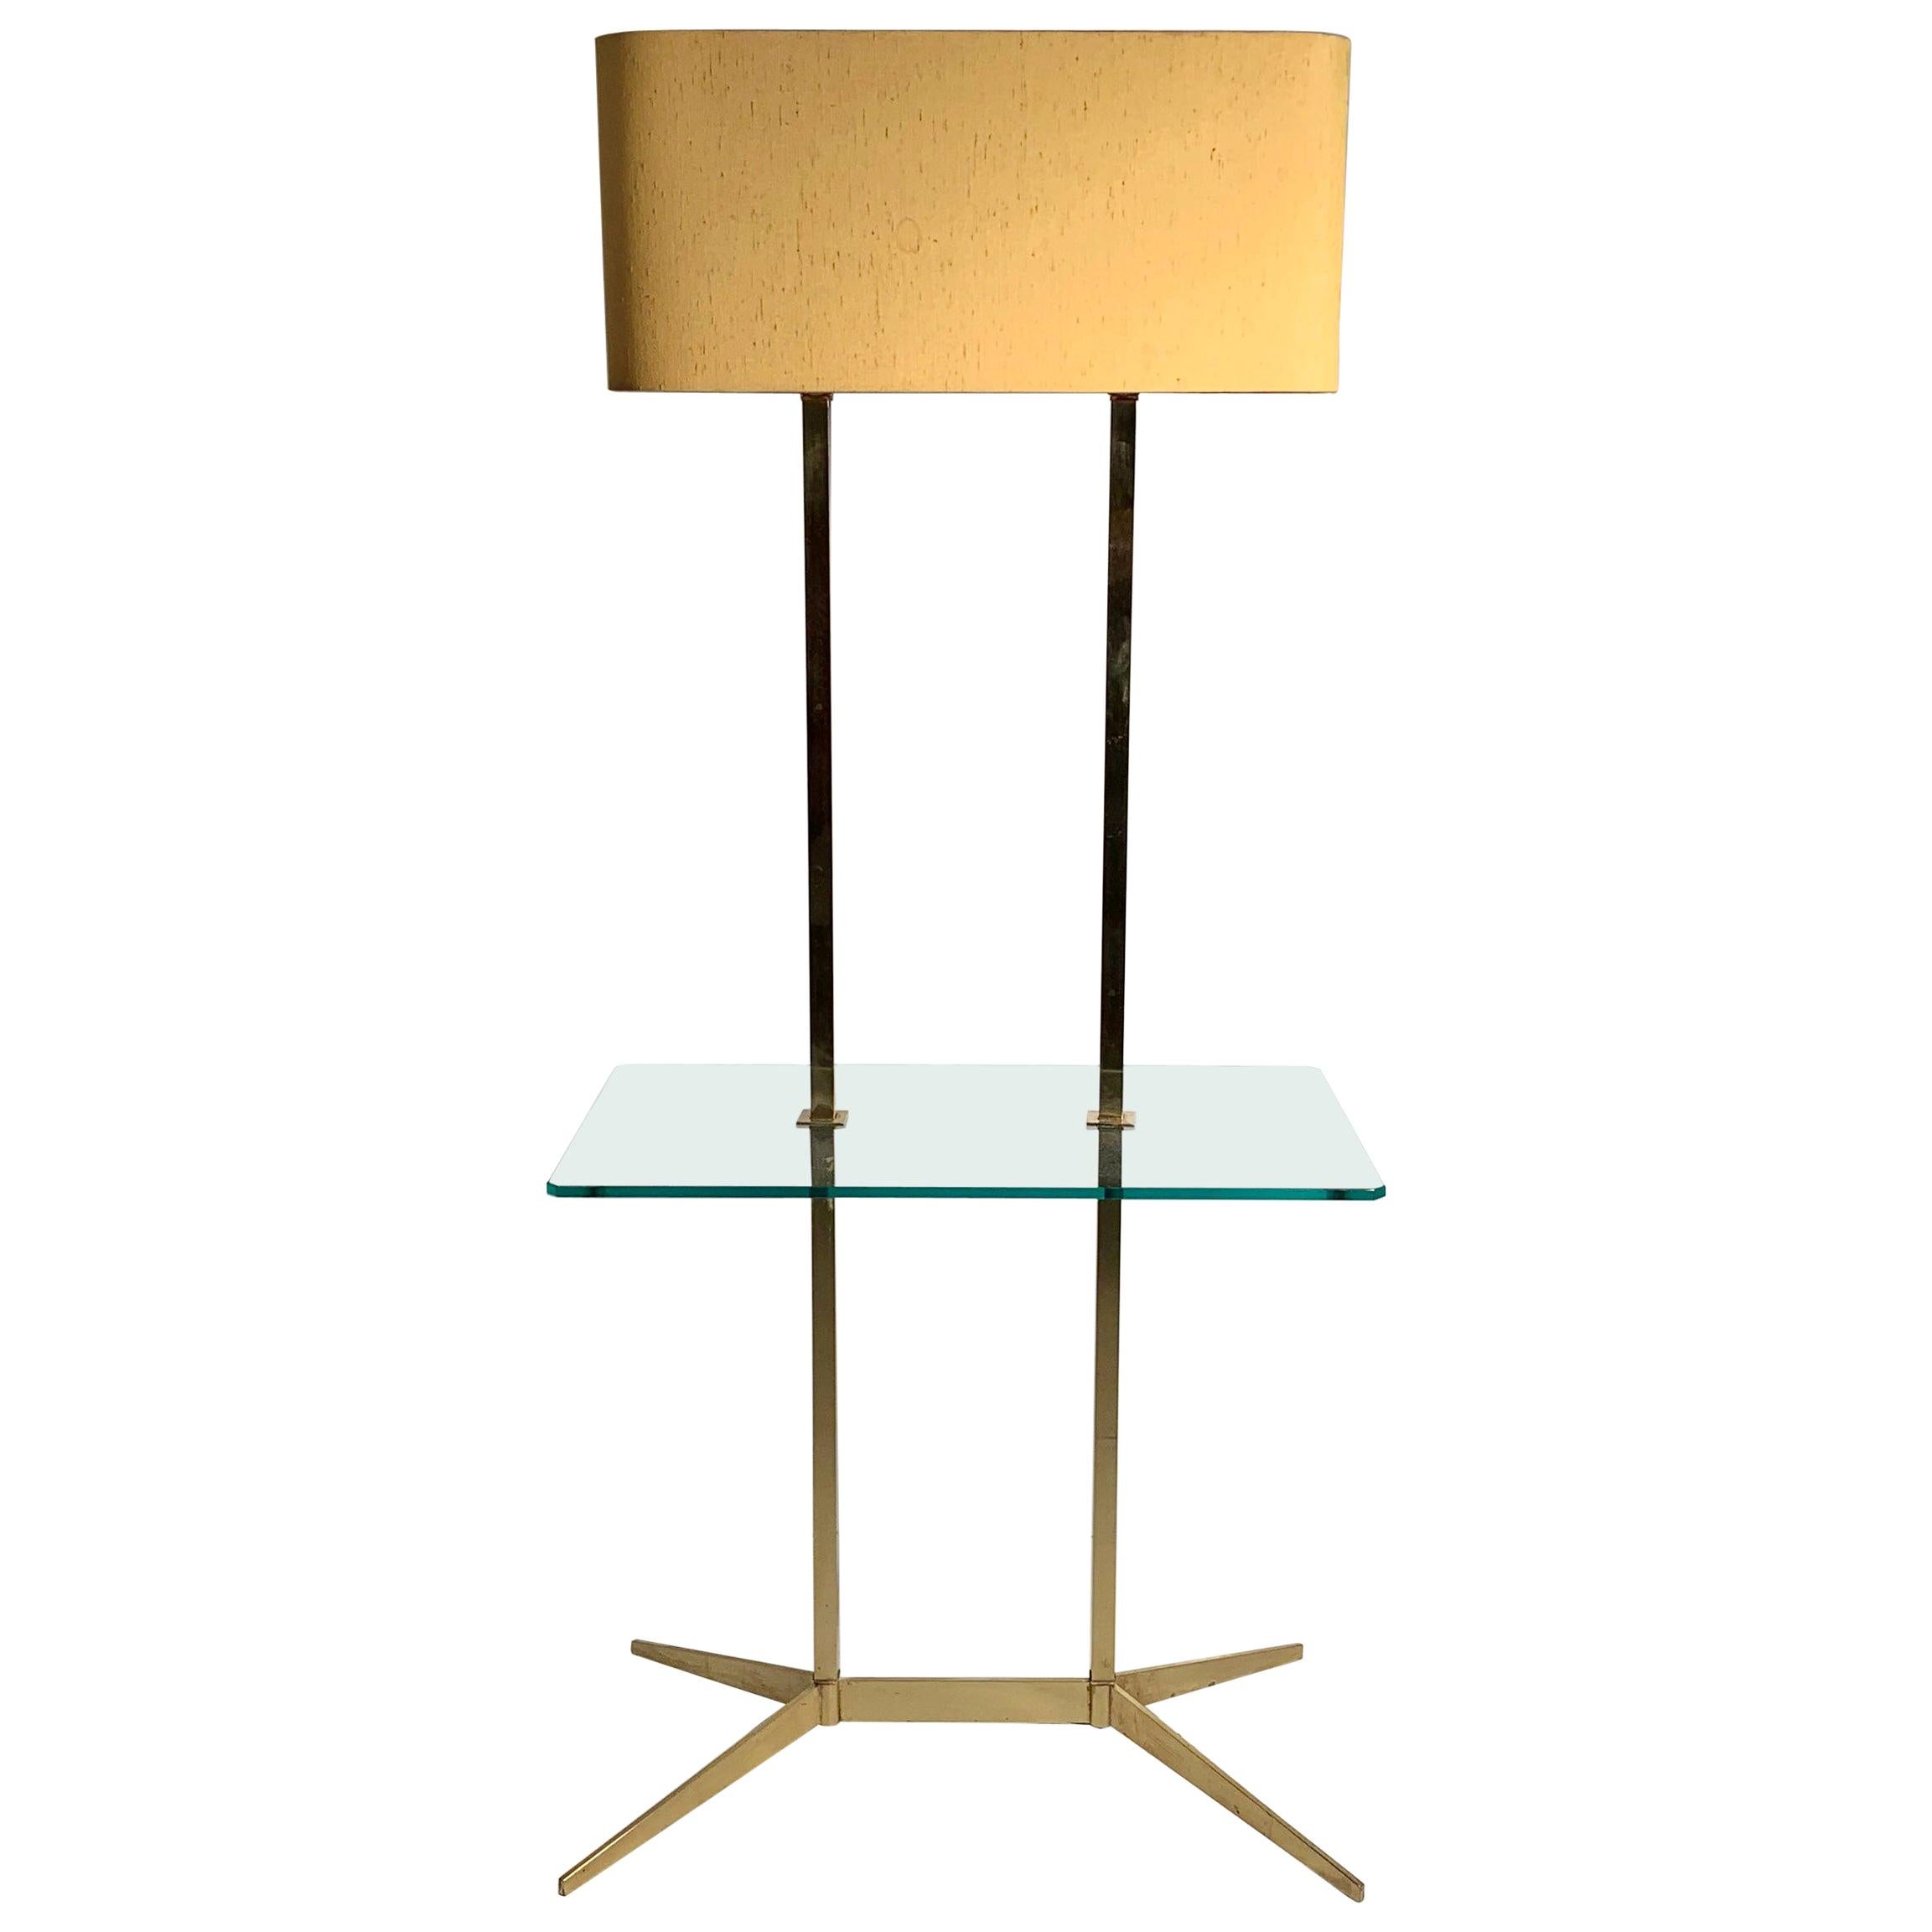 Vintage Mid-Century Modern Brass Table Floor Lamp attributed to Stiffel